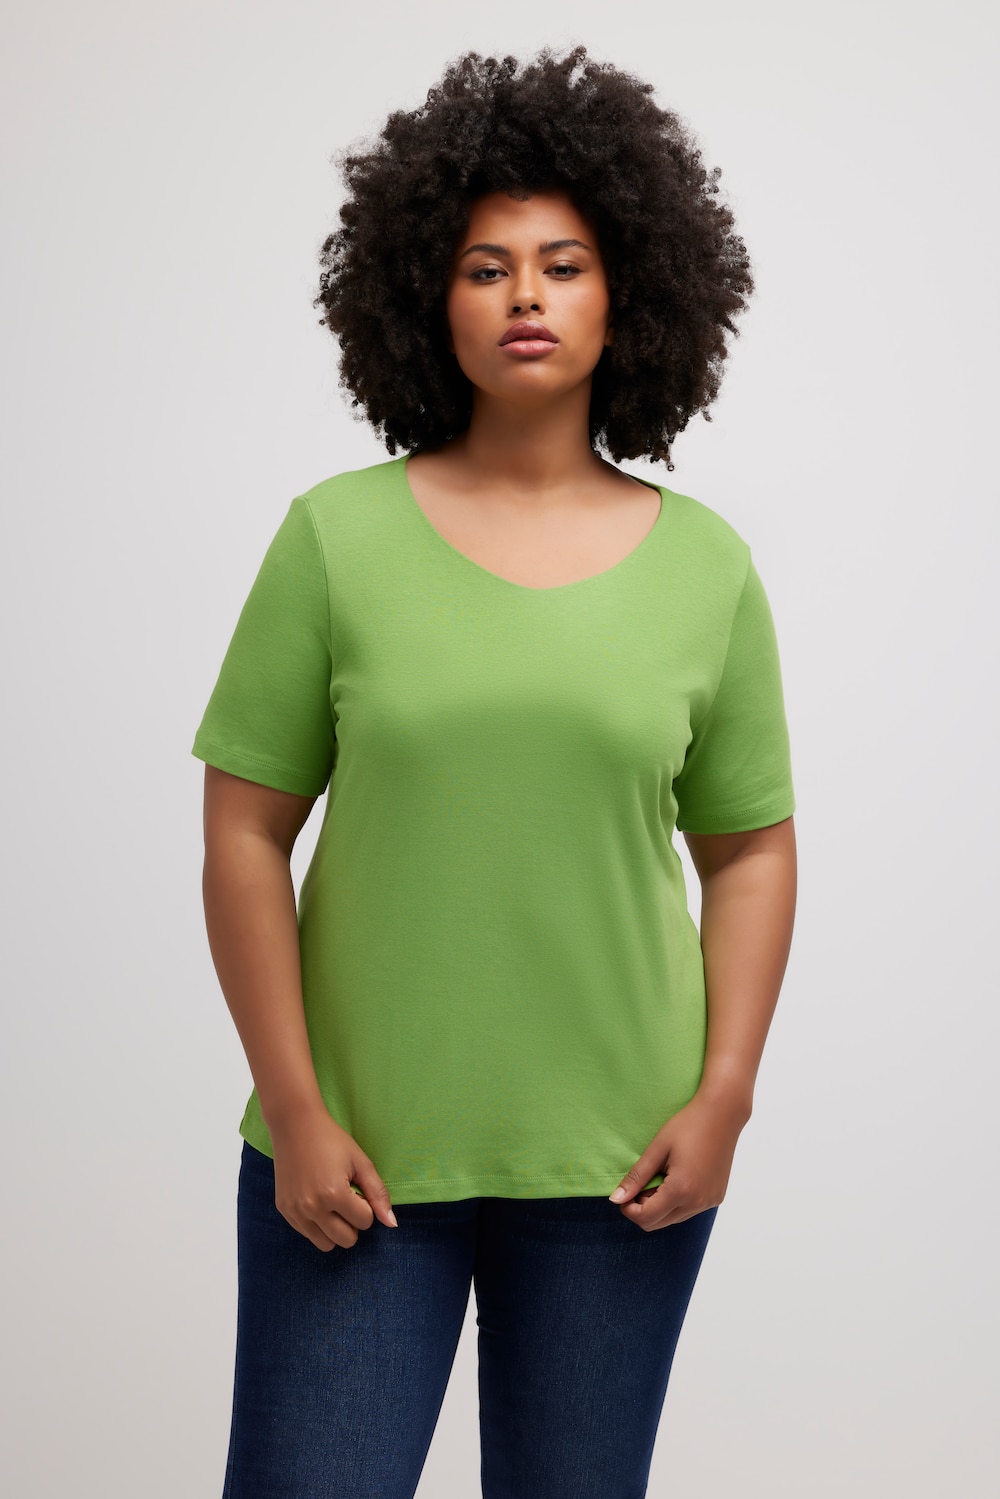 Große Größen Shirt, Damen, grün, Größe: 54/56, Baumwolle, Ulla Popken